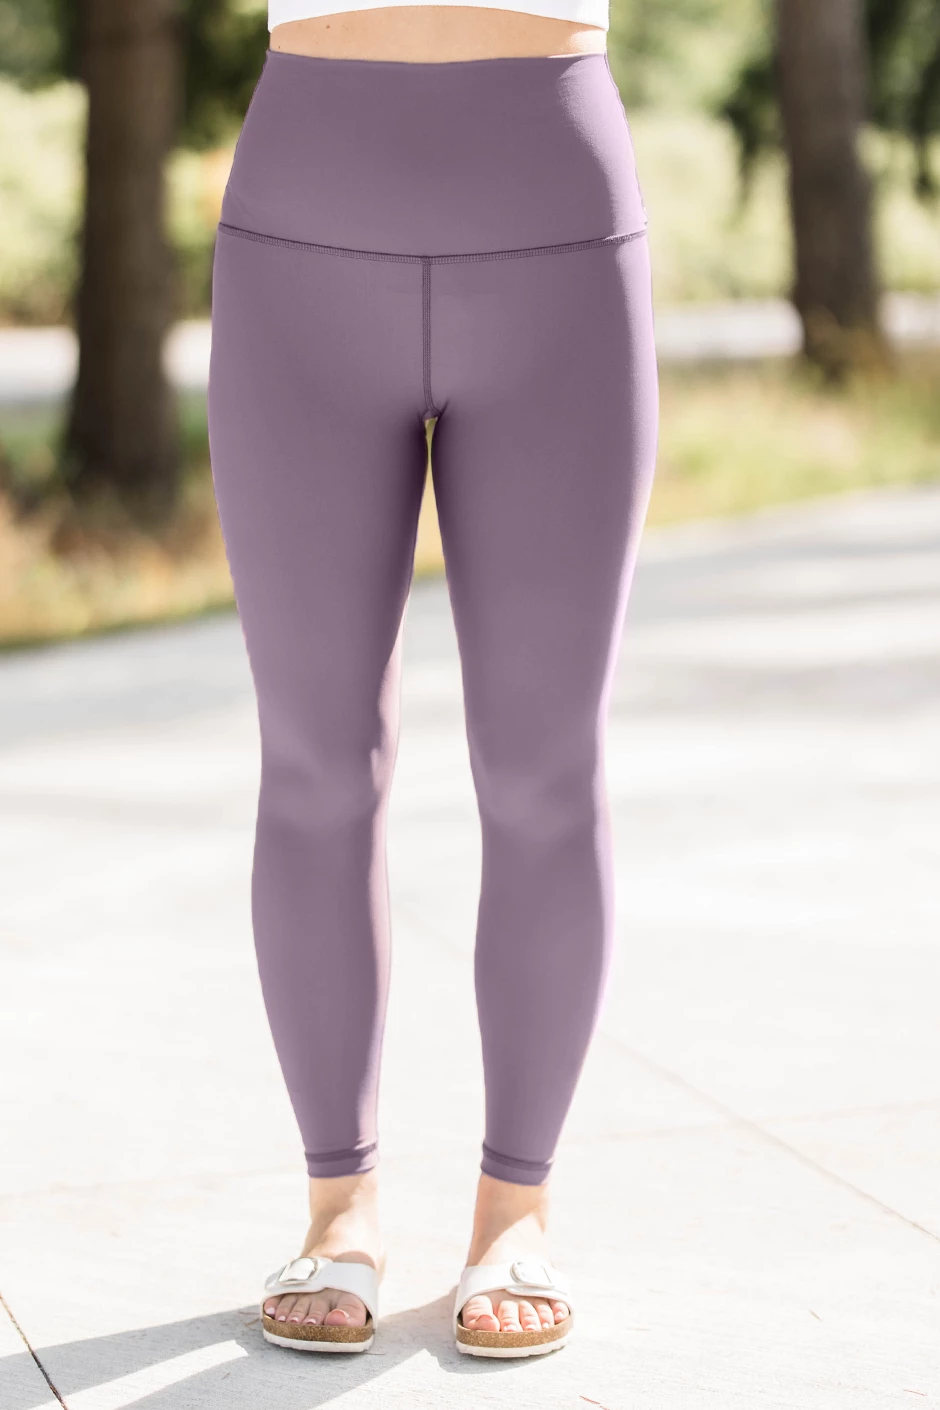 lululemon athletica size 8 align yoga pant in graphite purple